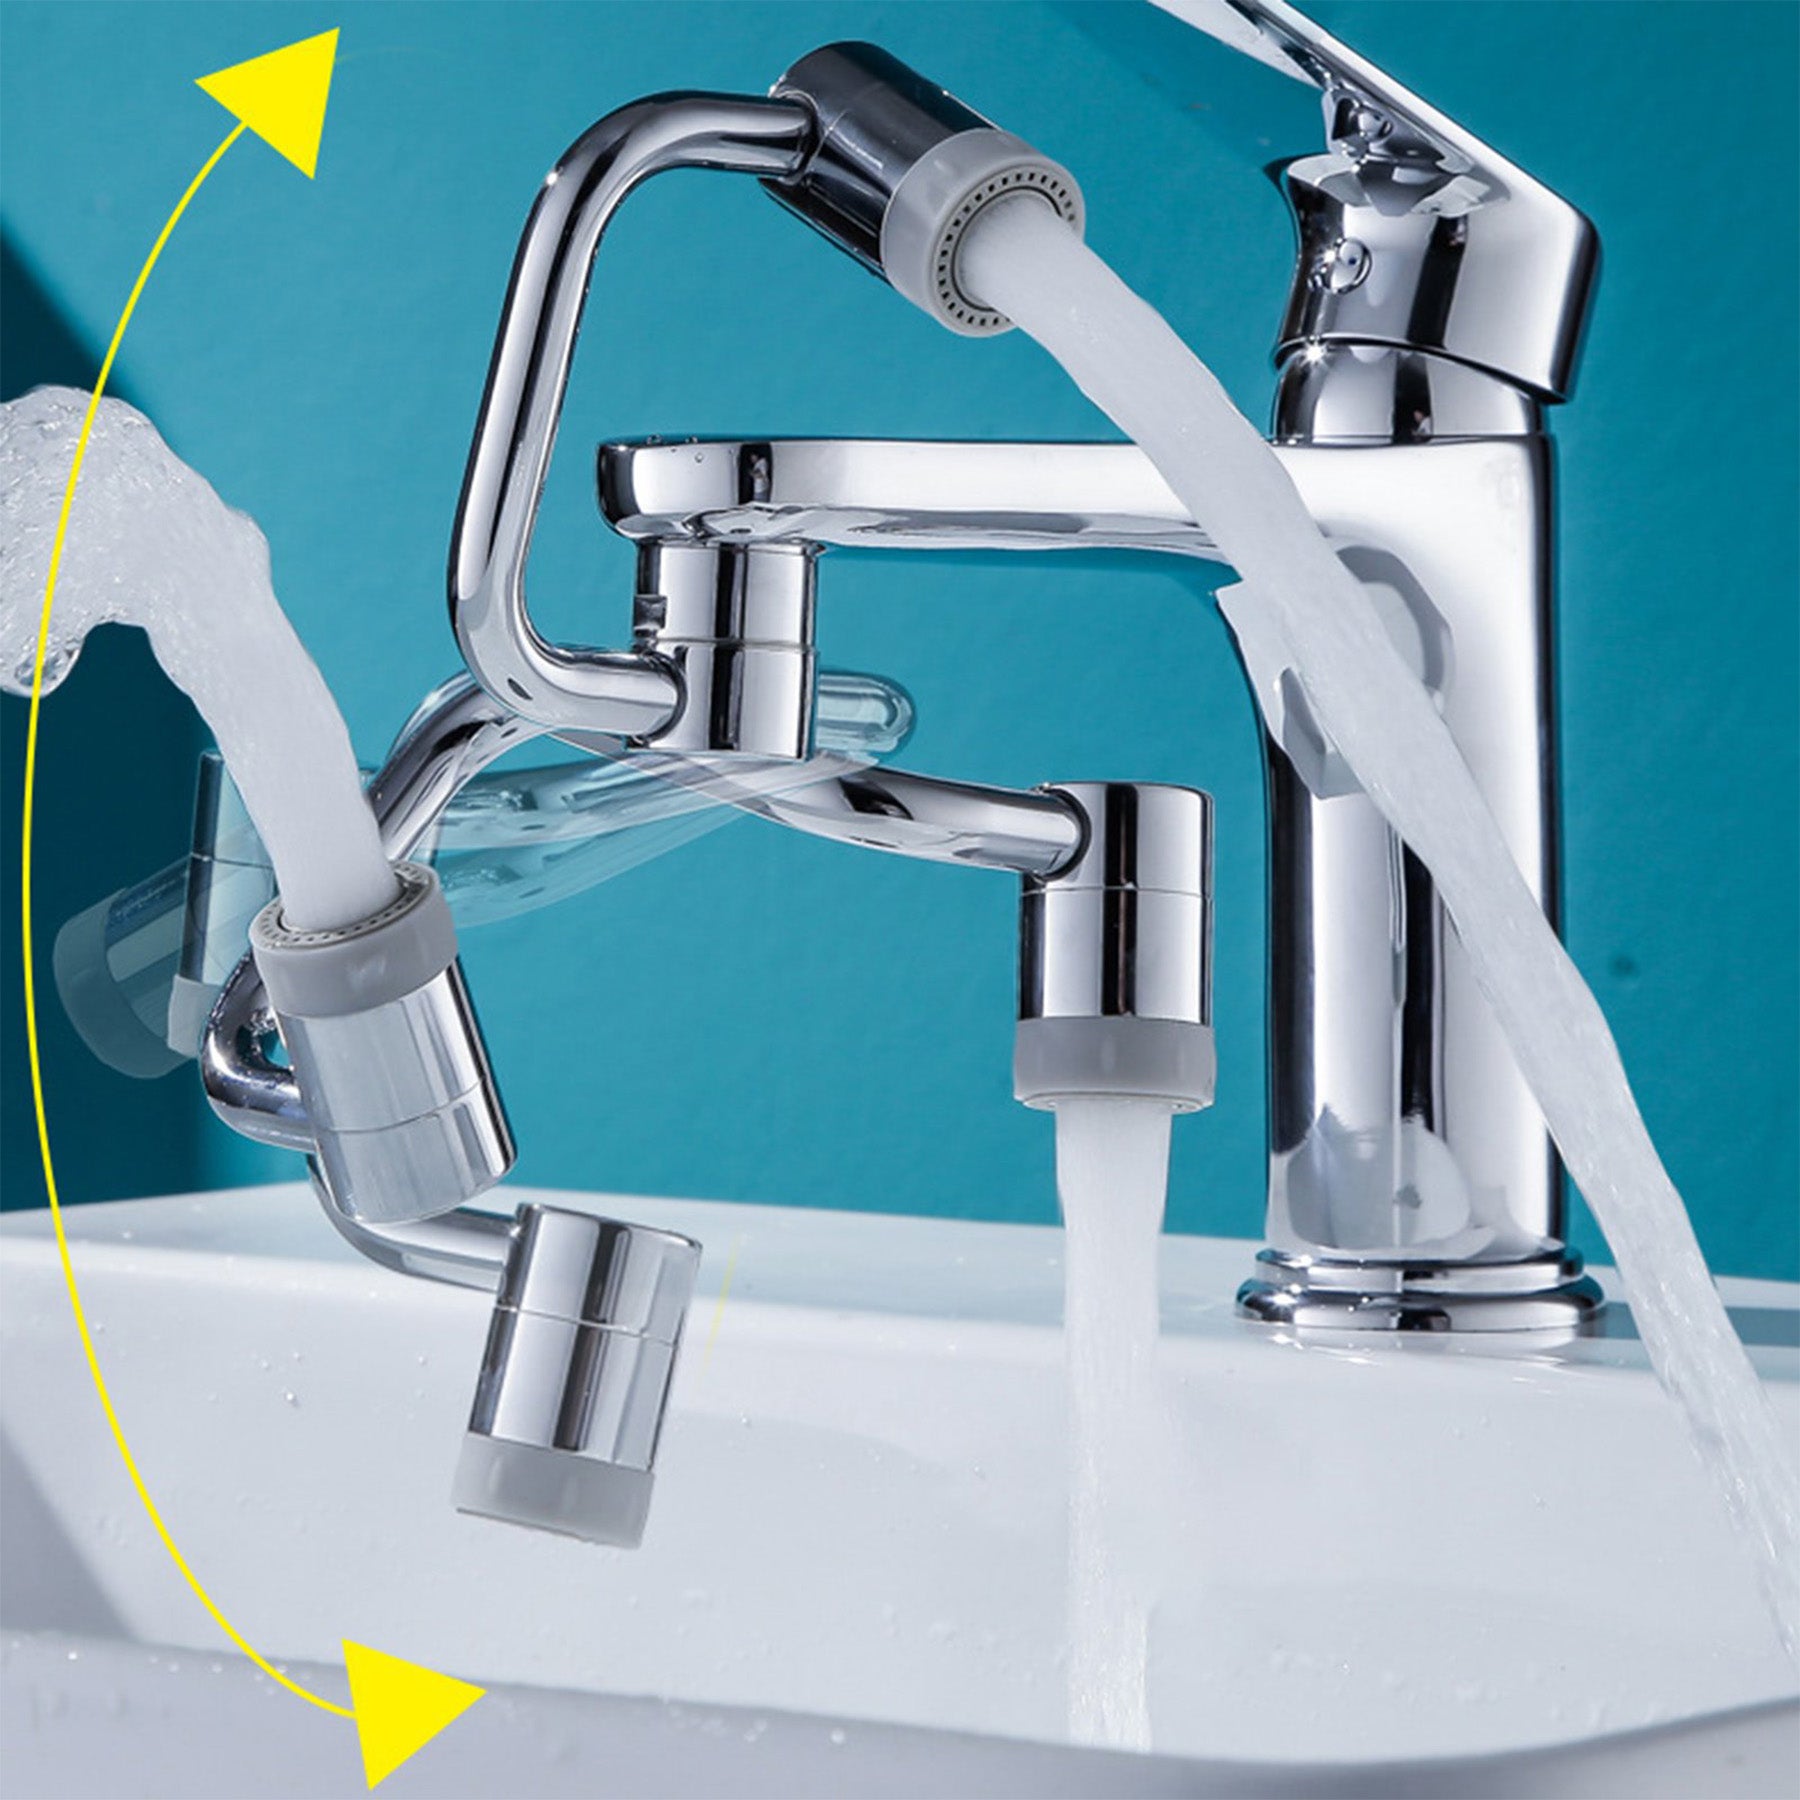 Universal extension faucet splash spray head